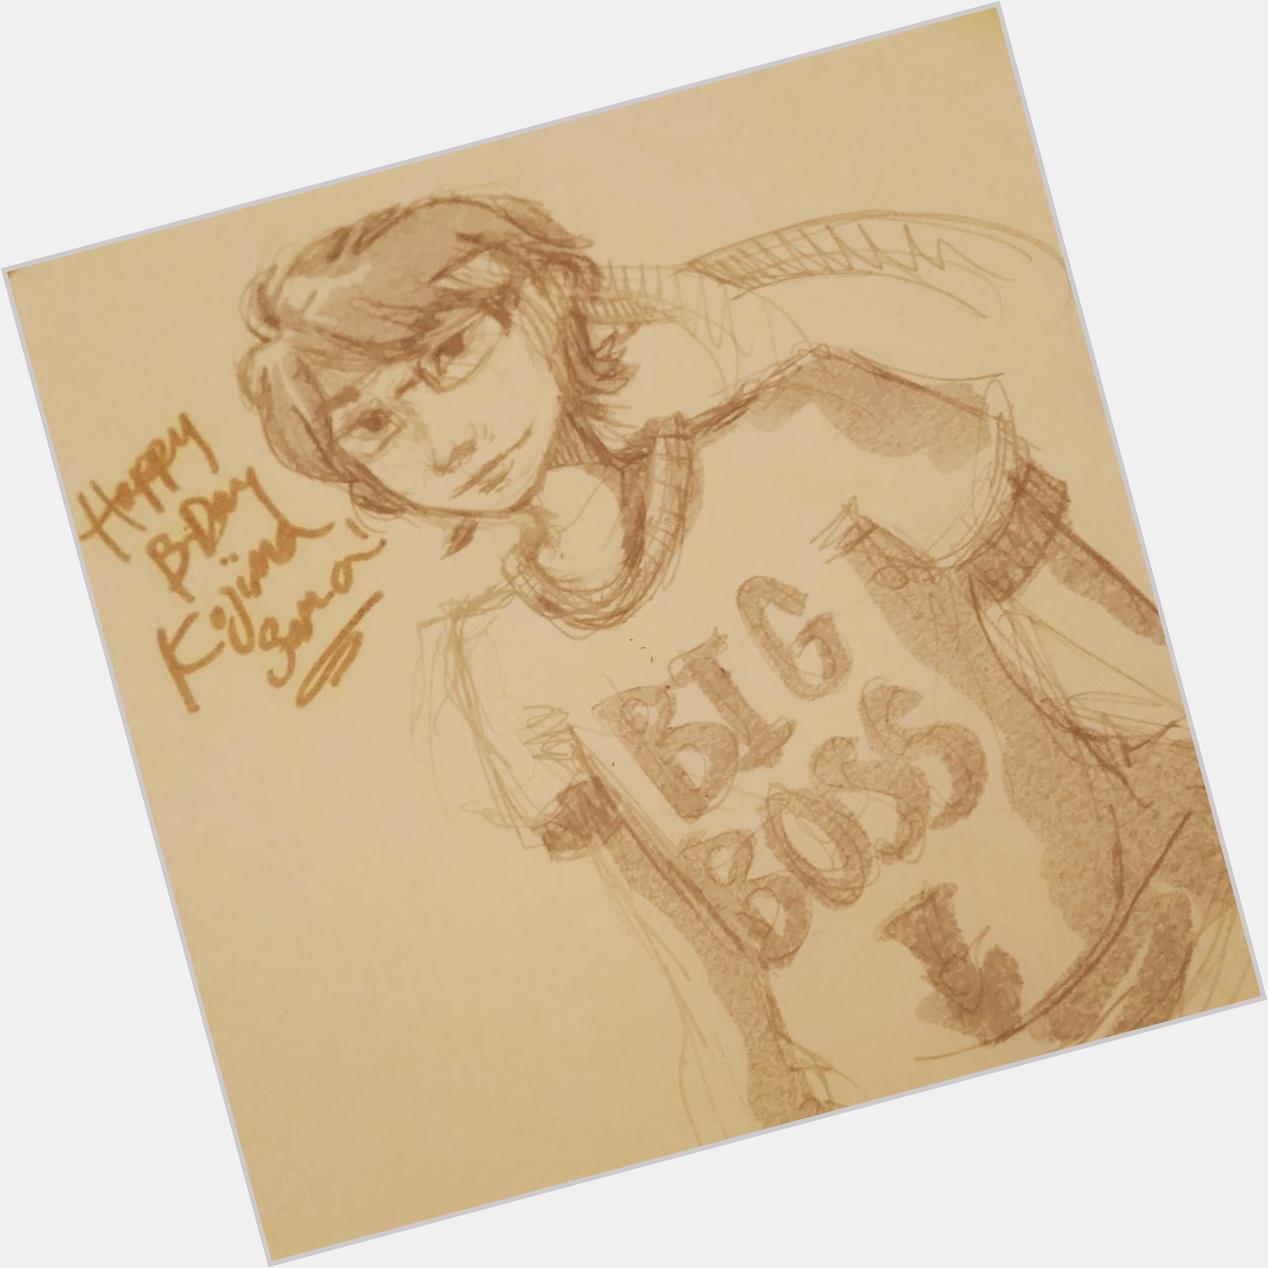  Happy belated birthday Kojima sama!   